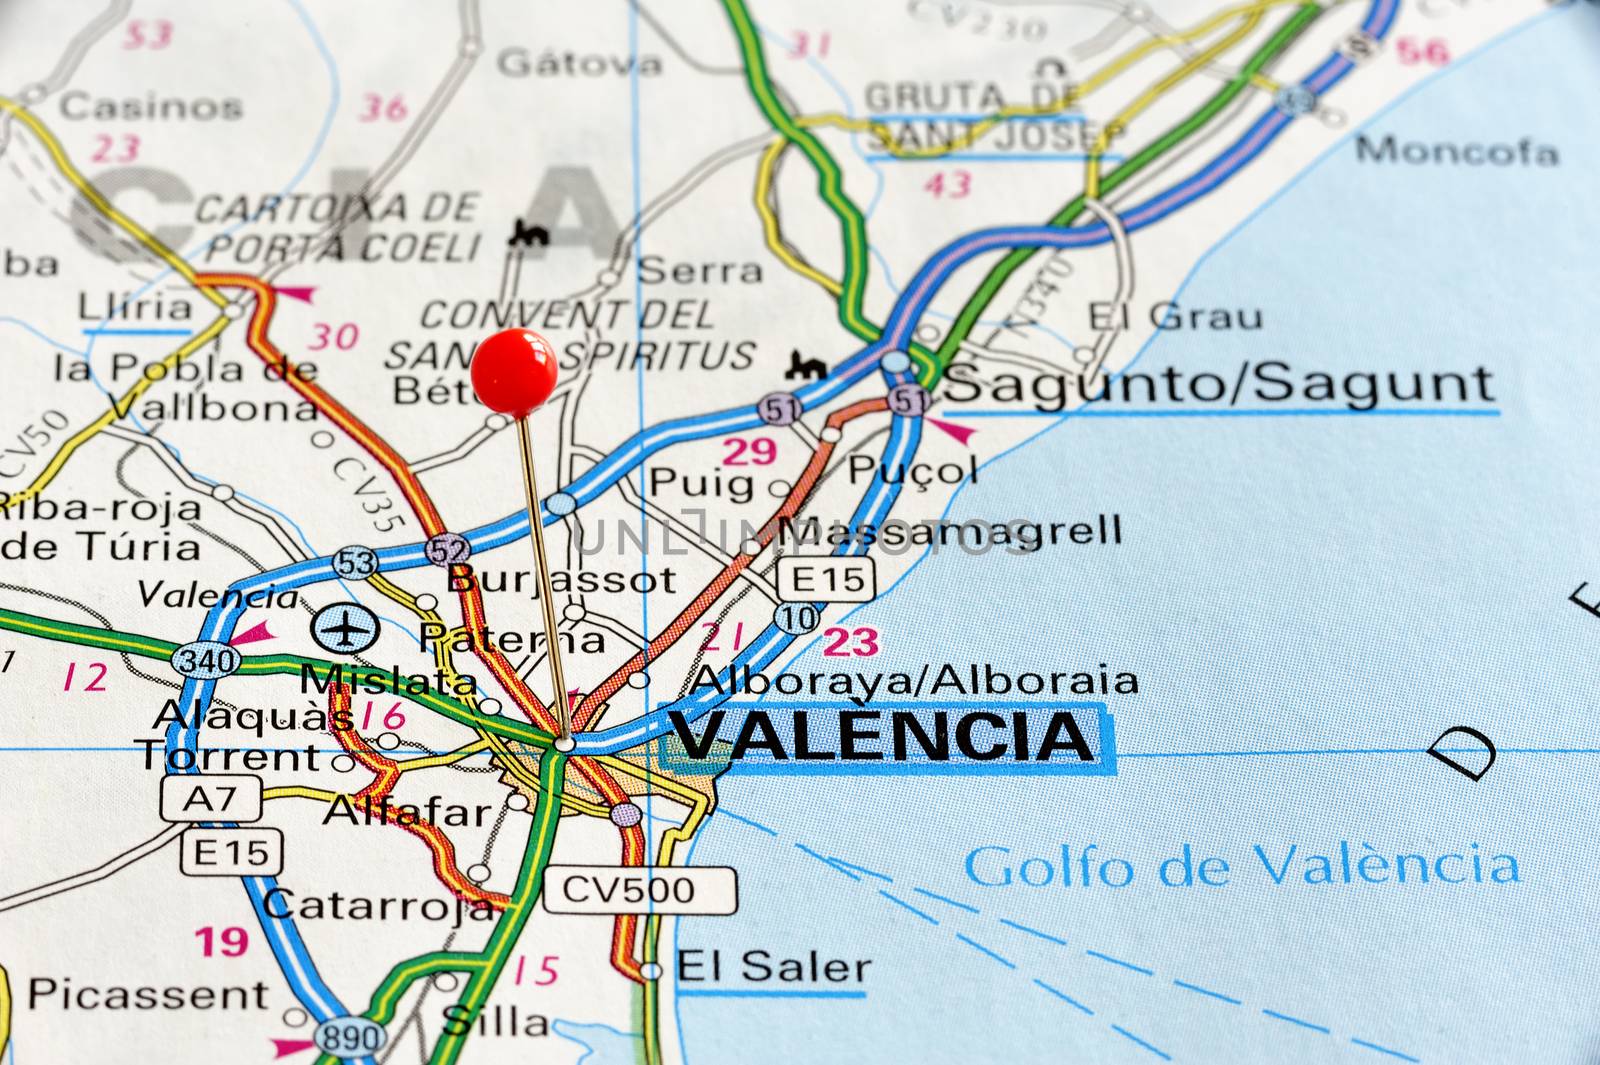 Destination Valencia spain on the map.